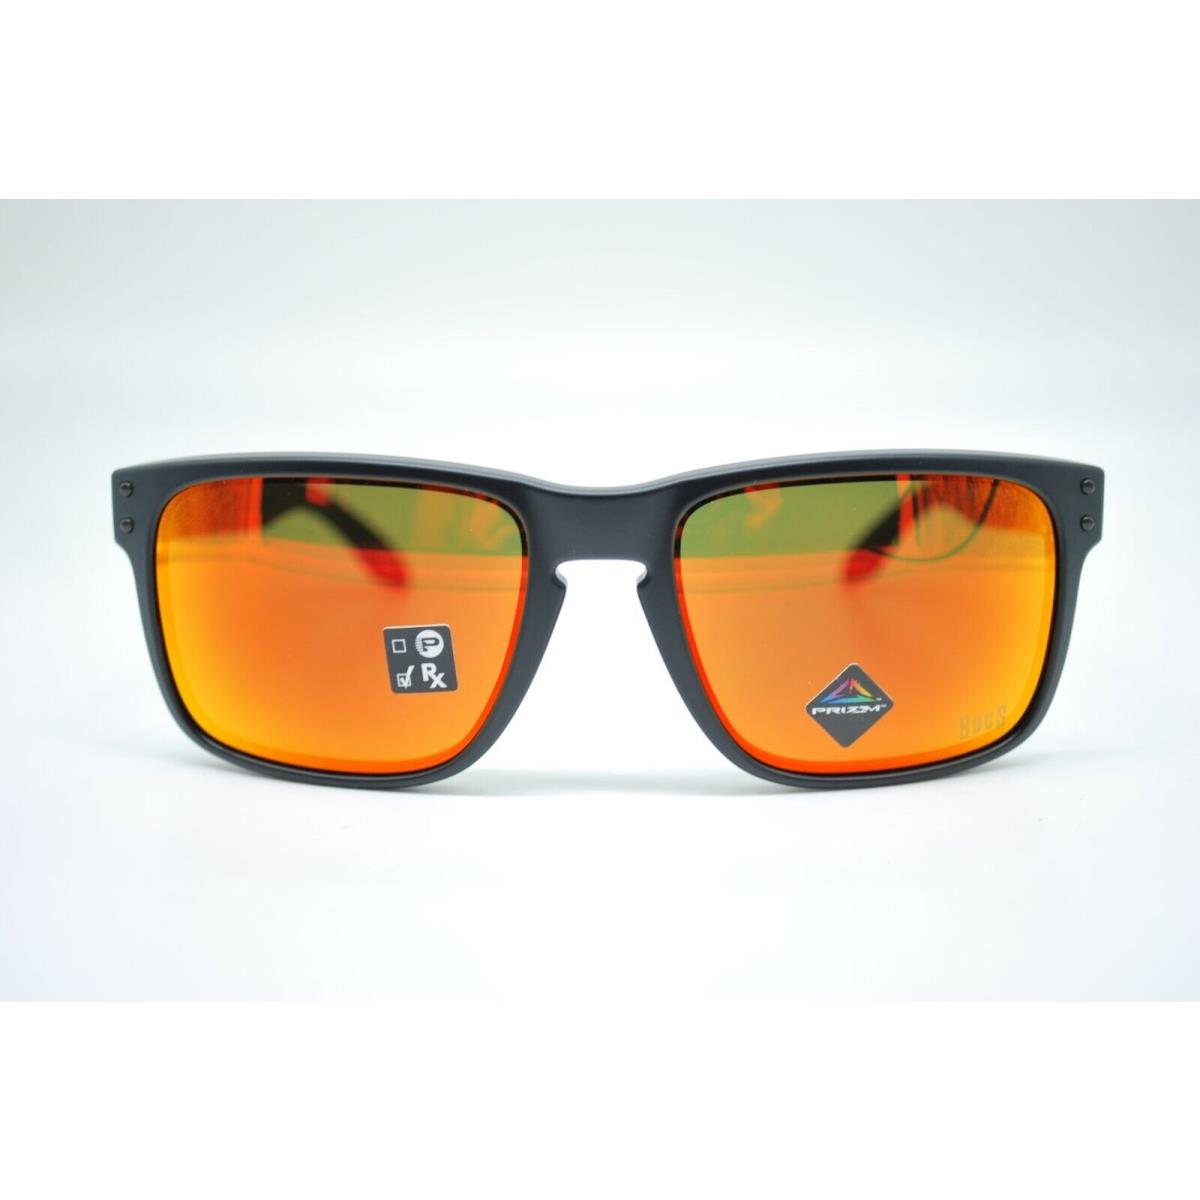 Oakley sunglasses Holbrook - Black Frame, RUBY Lens